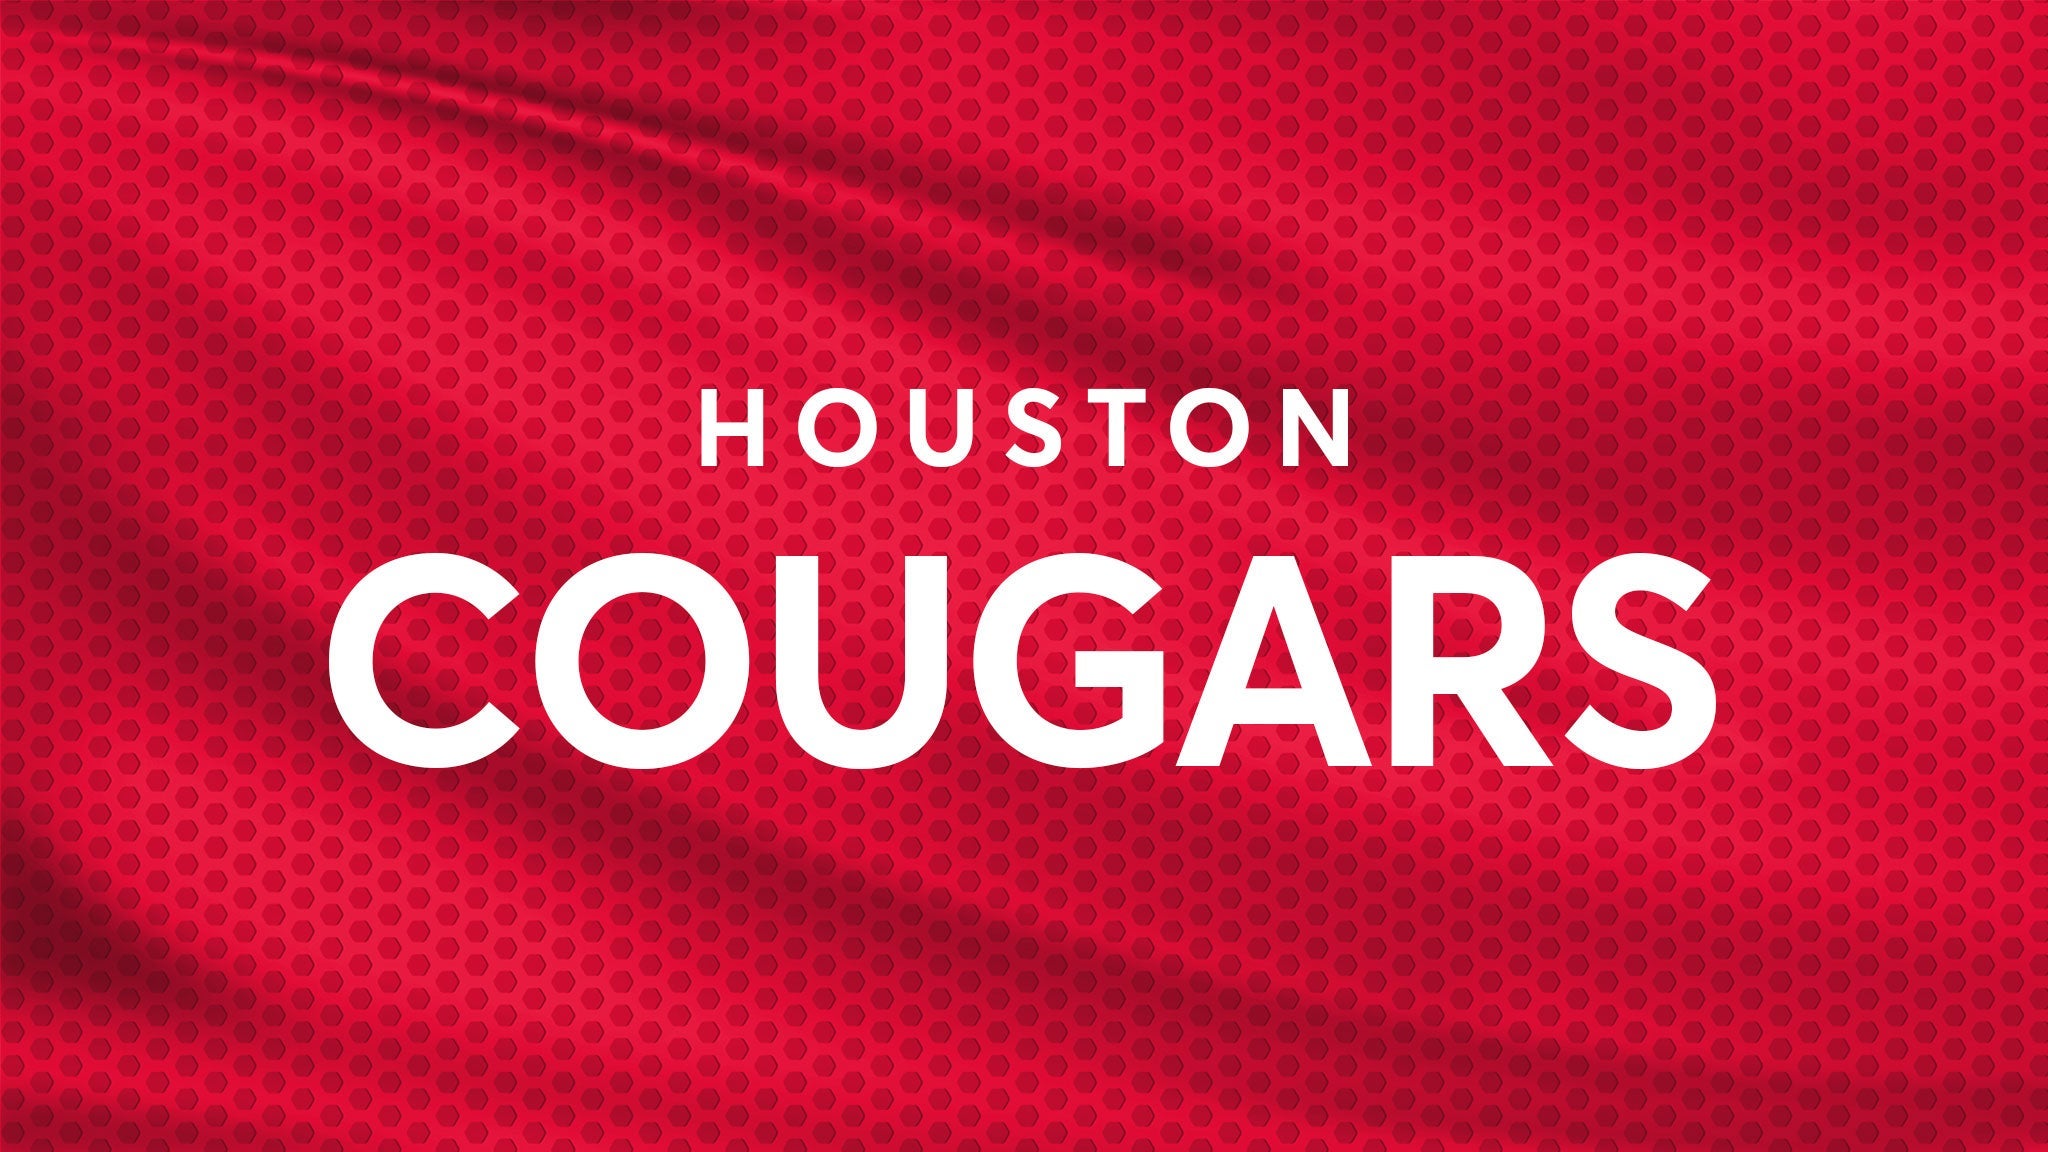 Houston Cougars Football vs. Baylor Bears Football hero